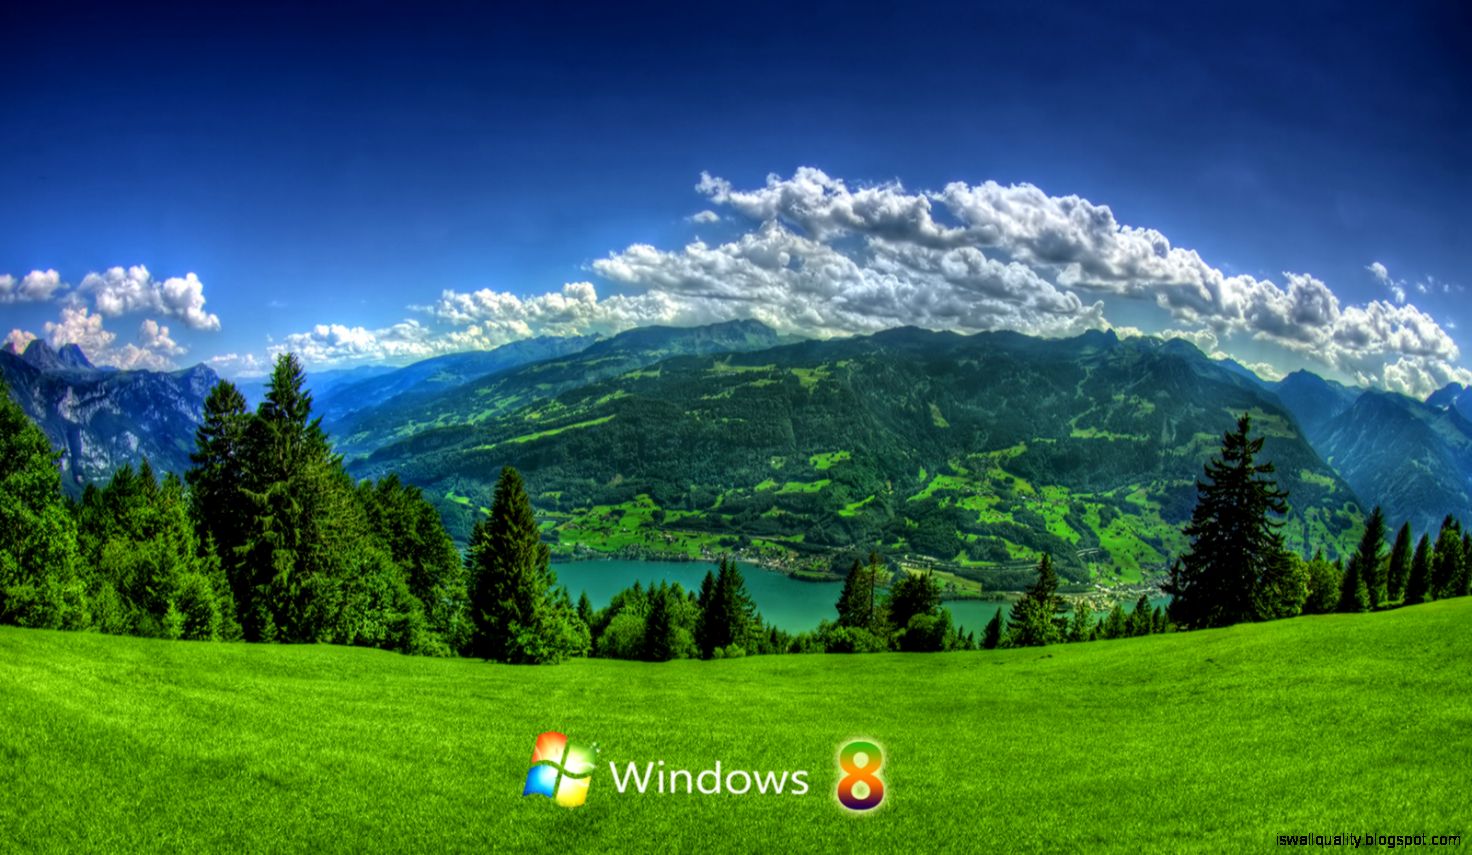 Windows 8 Next Generation Wallpaper Hd